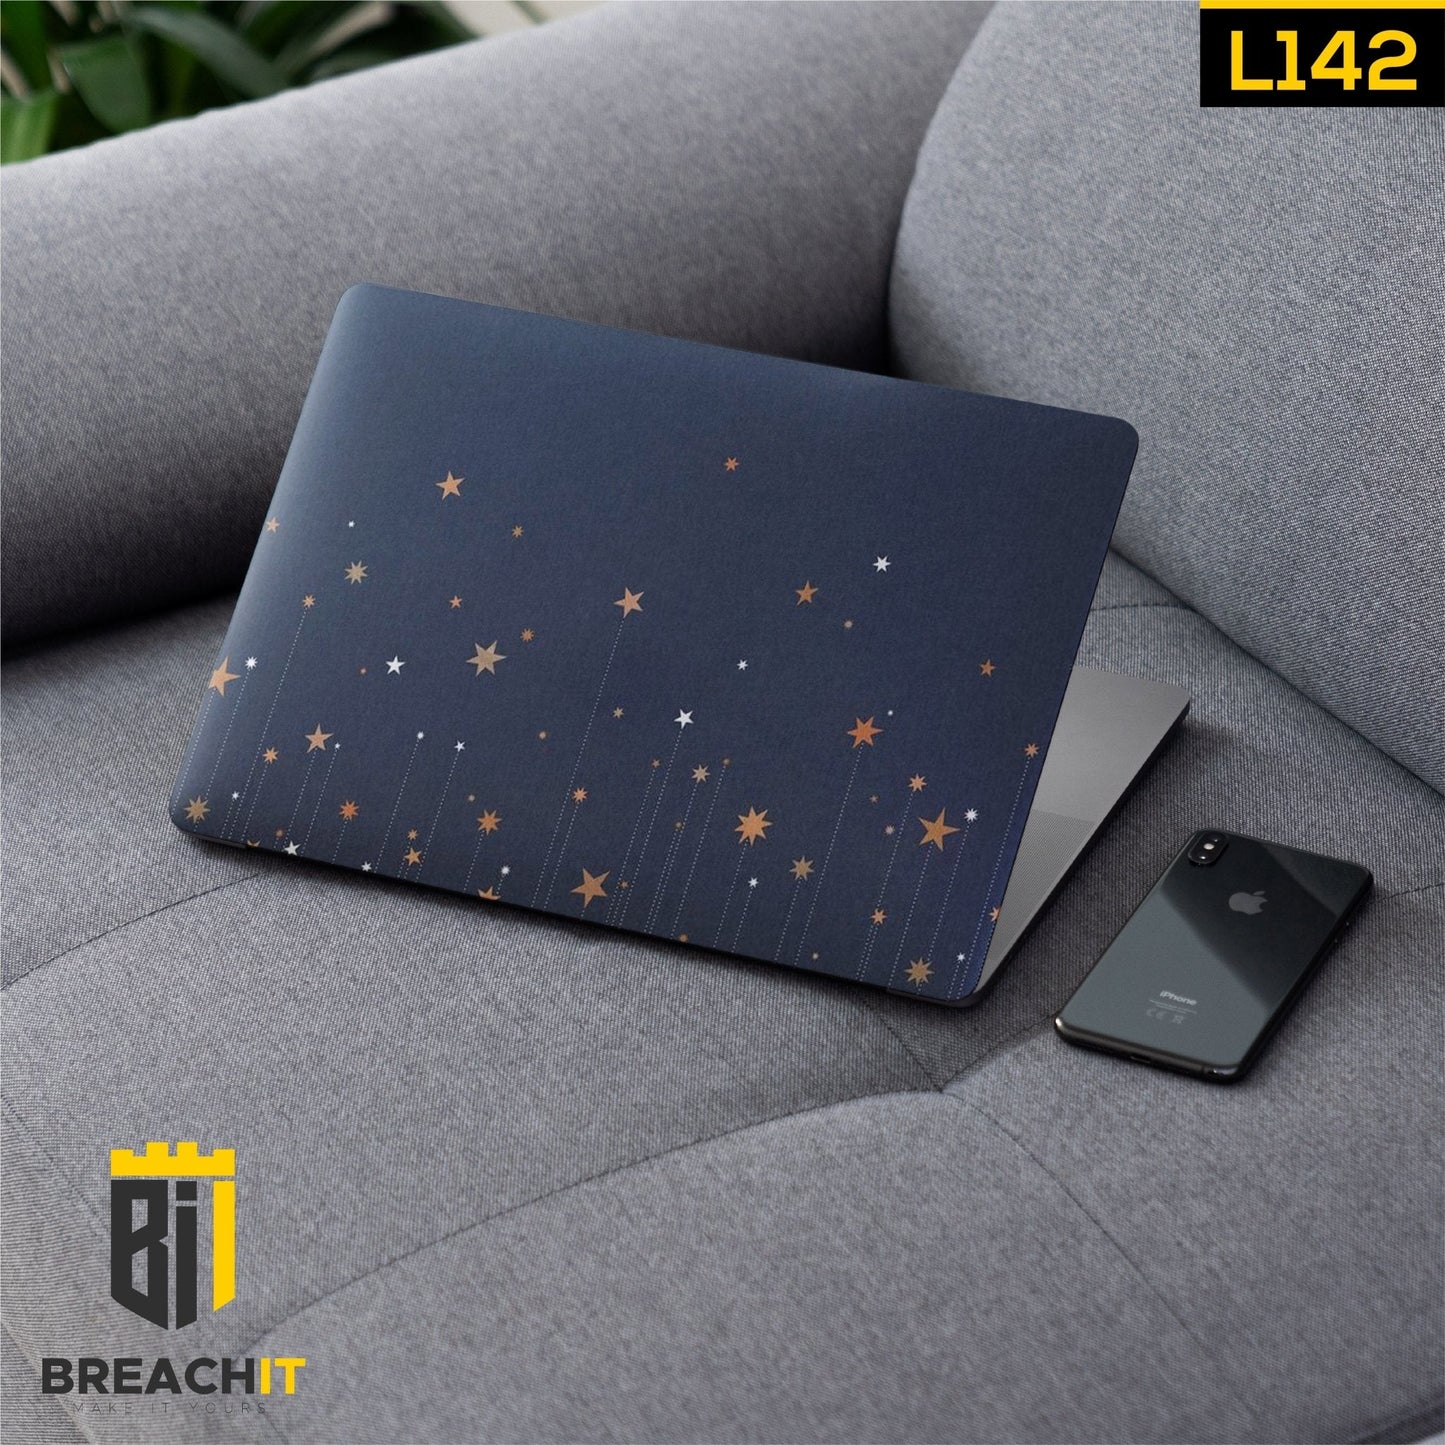 L142 Blue Stars Laptop Skin - BREACHIT